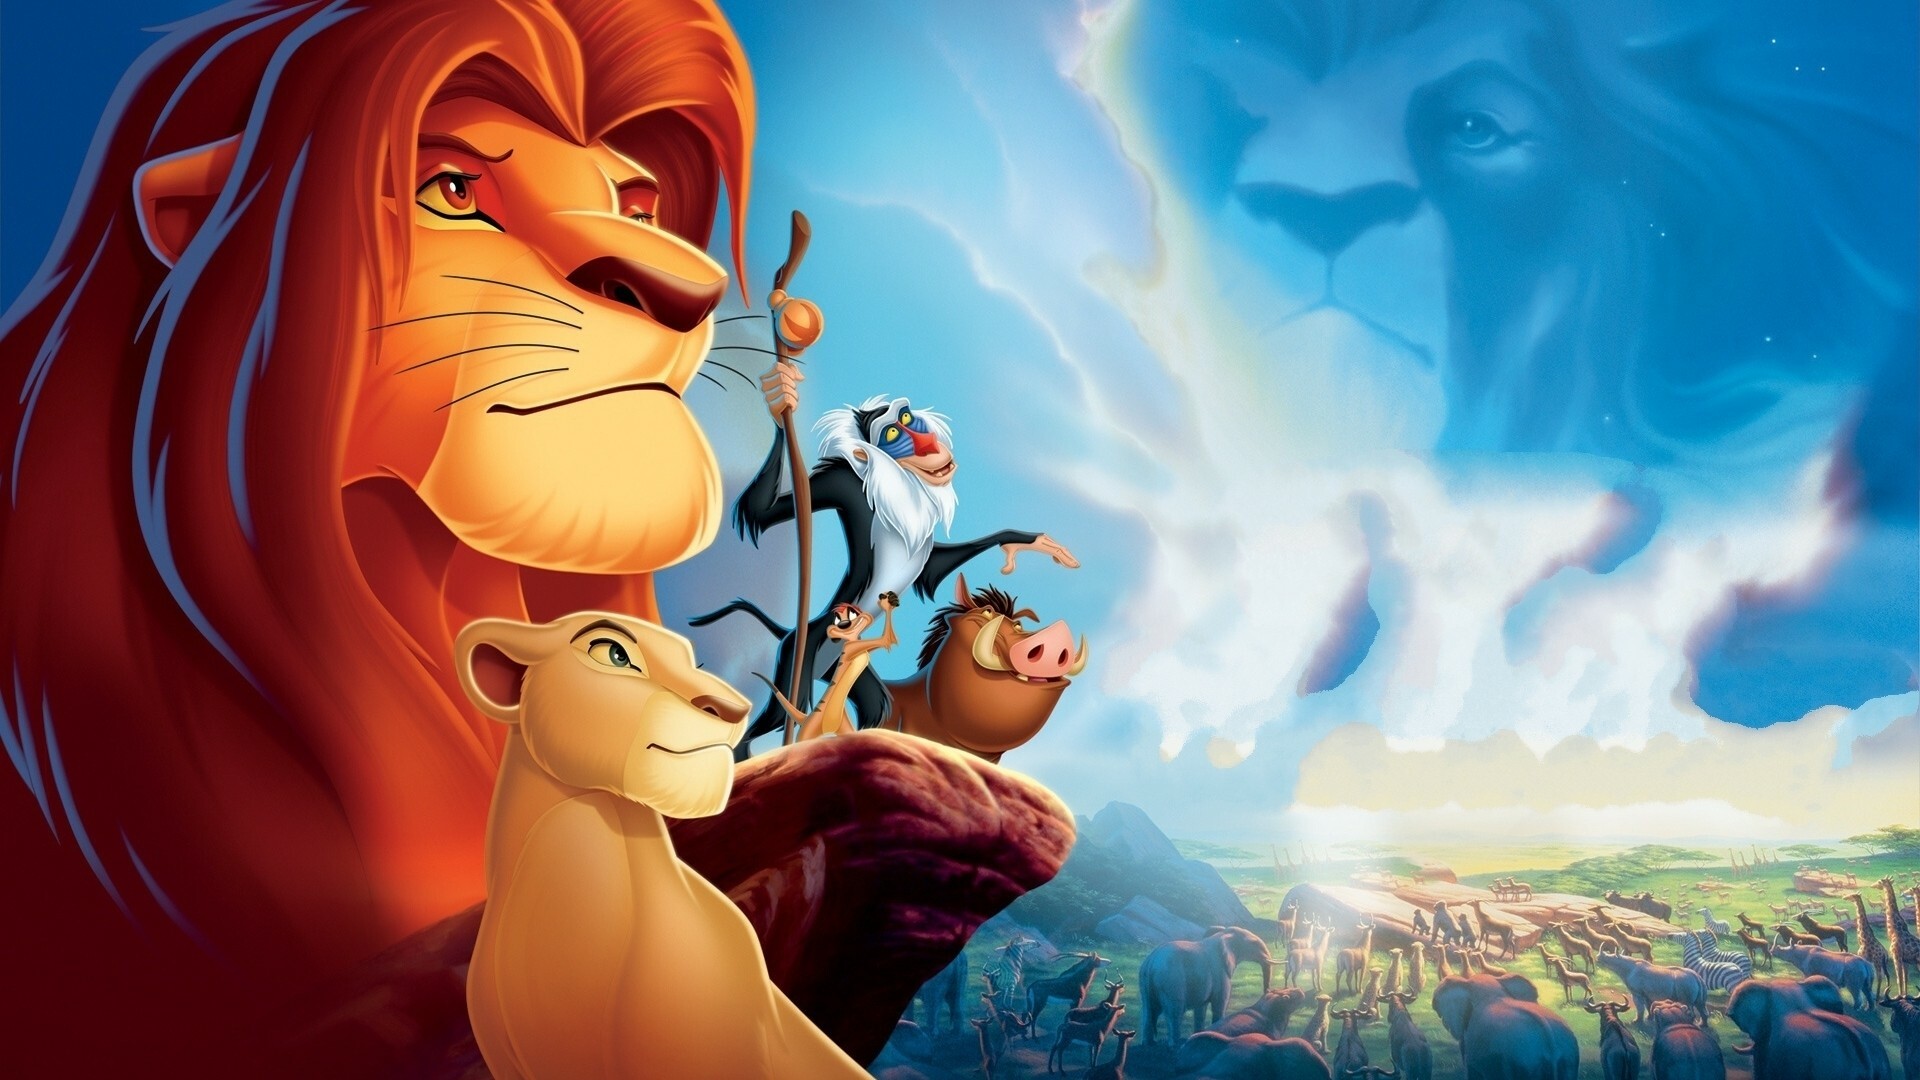 The Lion King: Simba, Timon, Pumba, Rafiki the mandrill, the kingdom's shaman and advisor. 1920x1080 Full HD Background.